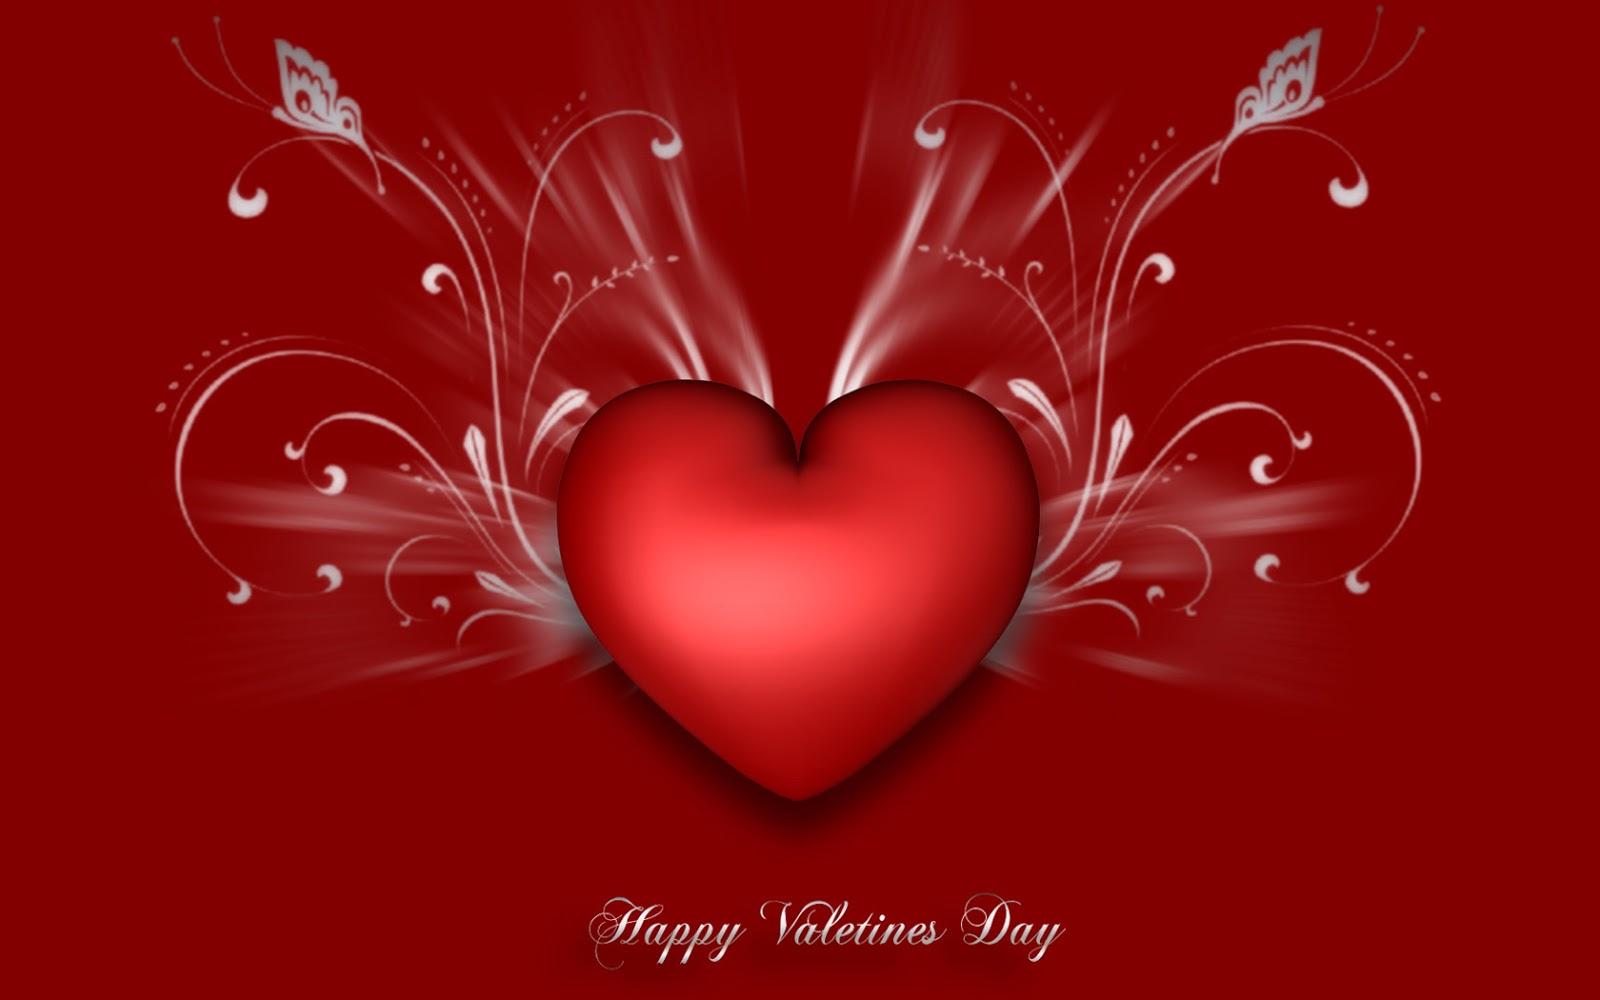 Valentines day poems, valentines day picture, valentine messages, valentines day cards: valentines day desktop background HD wallpaper 2013